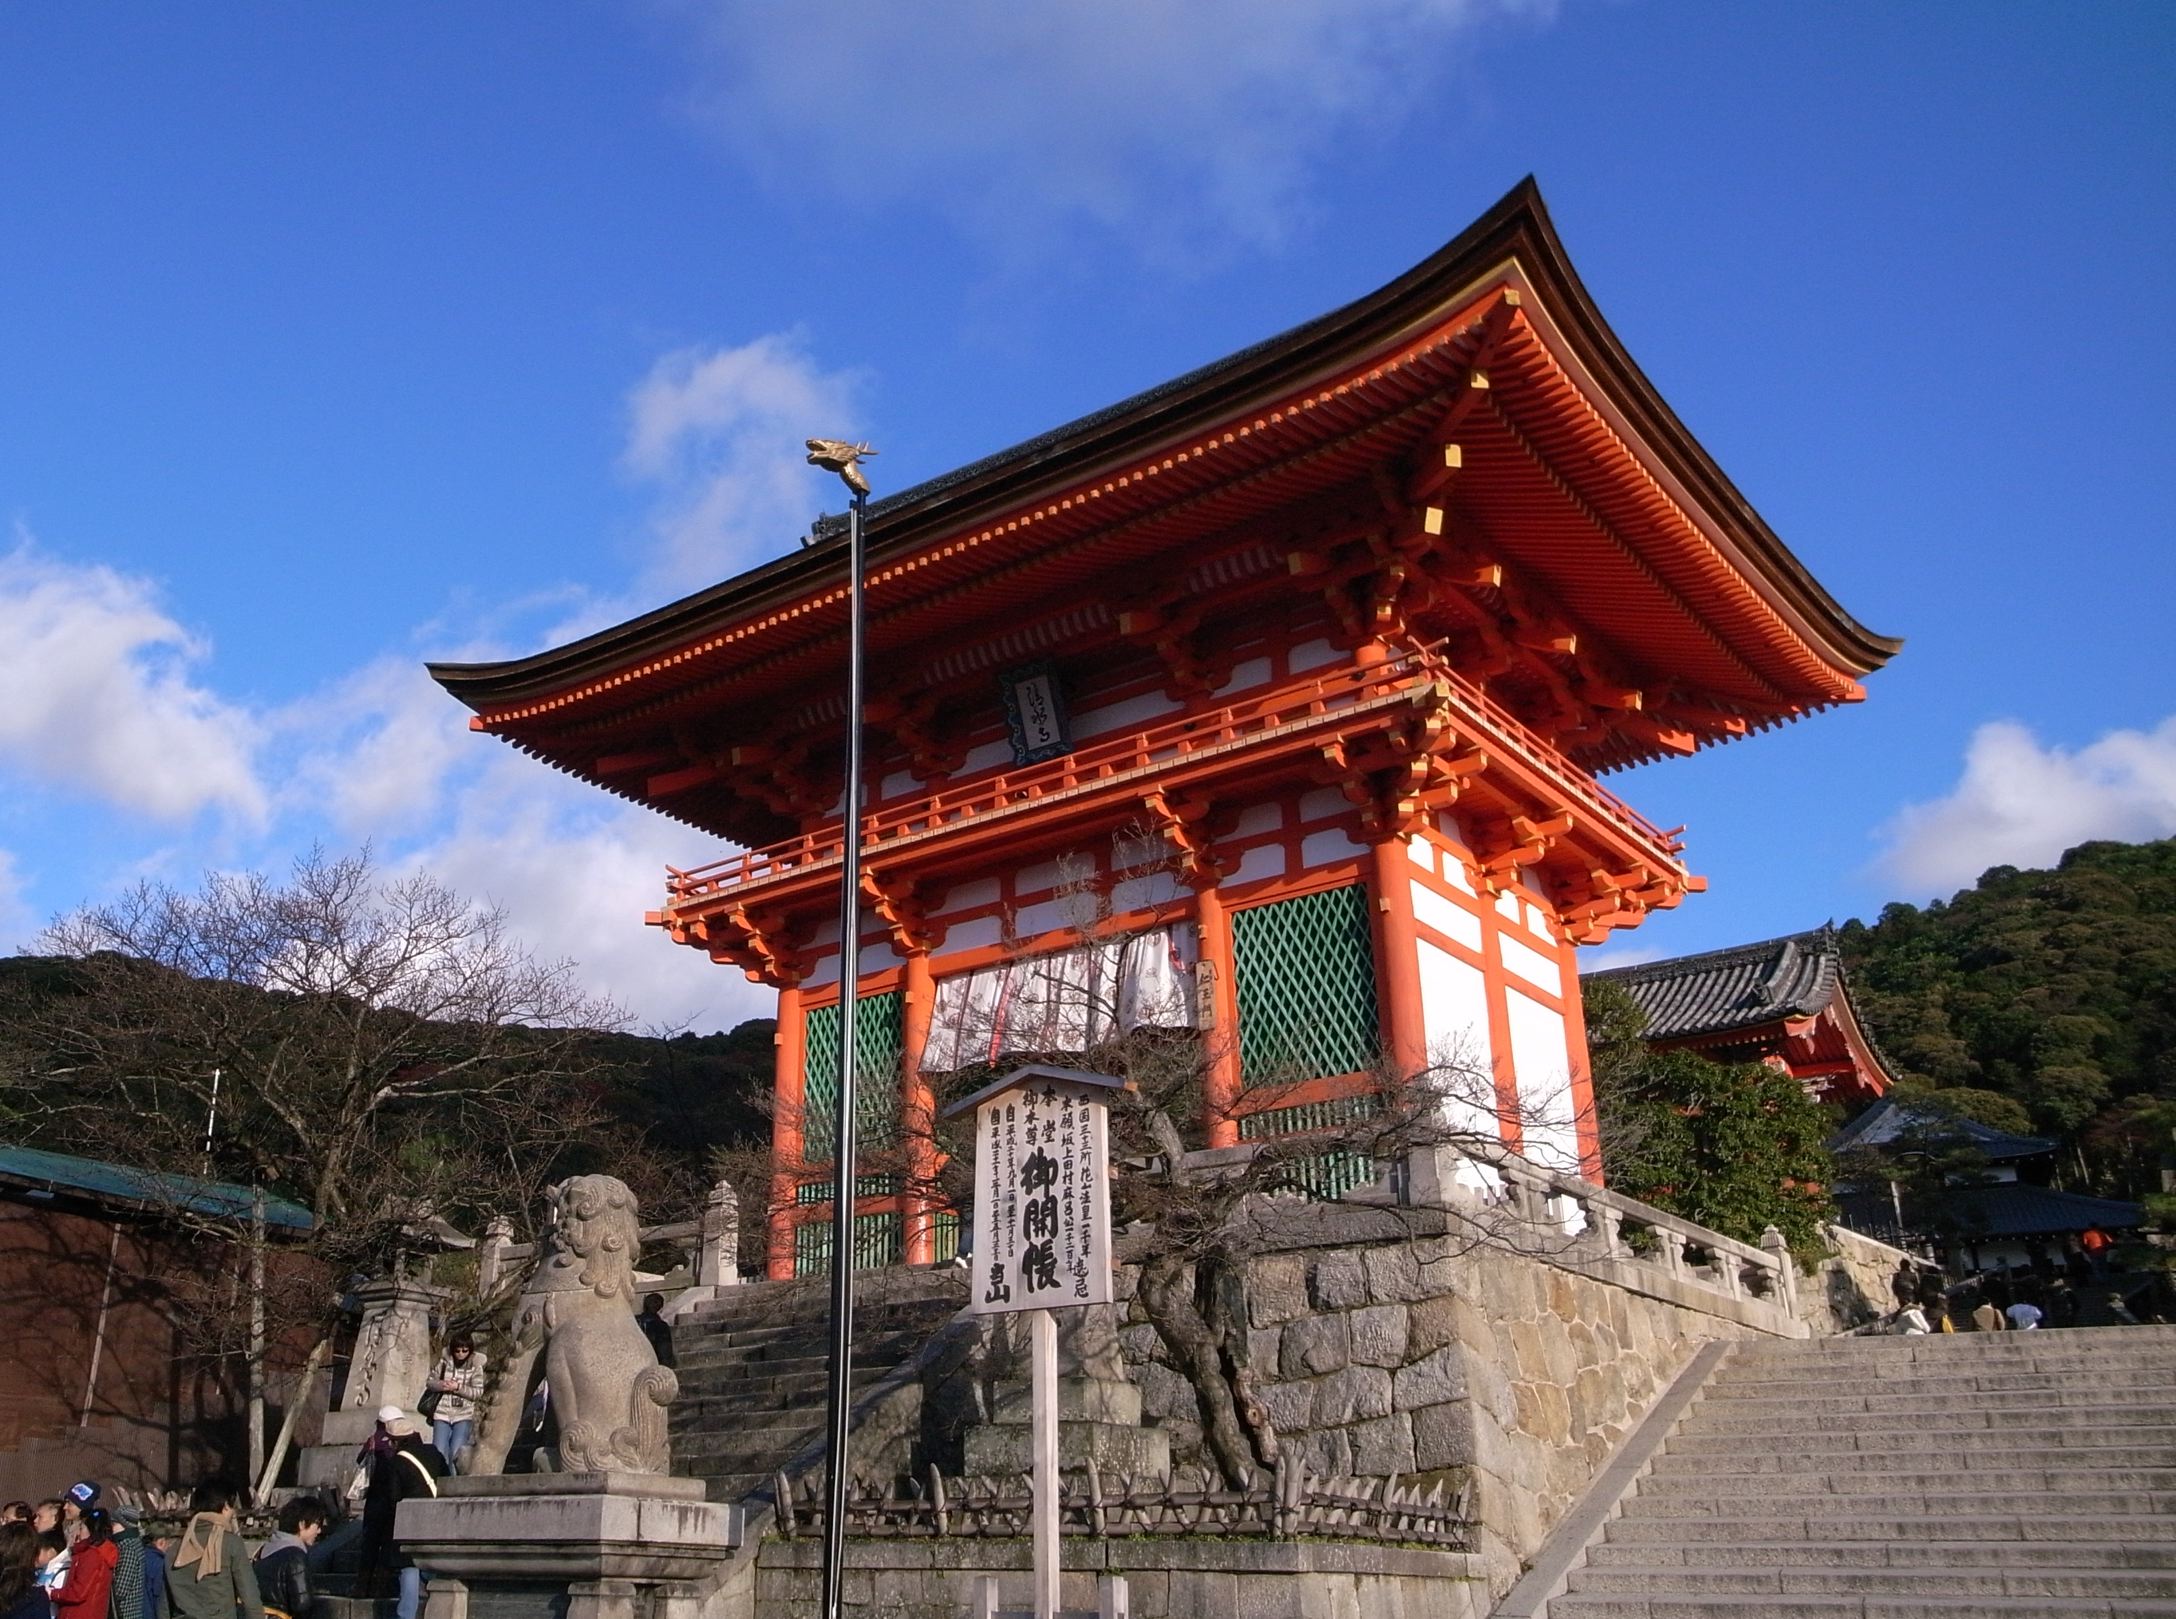 Amazing Kiyomizu-dera Pictures & Backgrounds